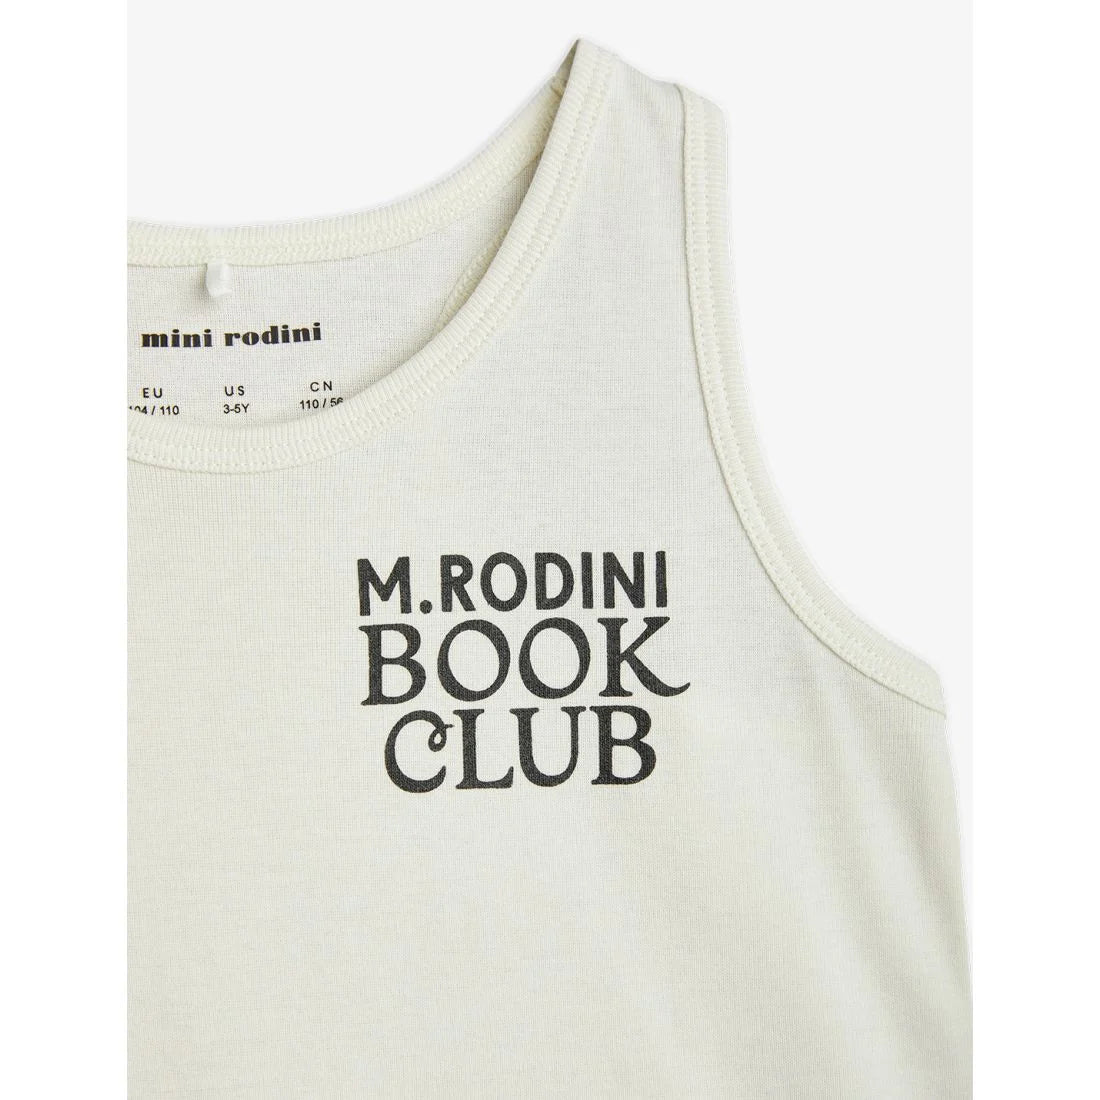 MINI RODINI Book Club Tank Top ALWAYS SHOW